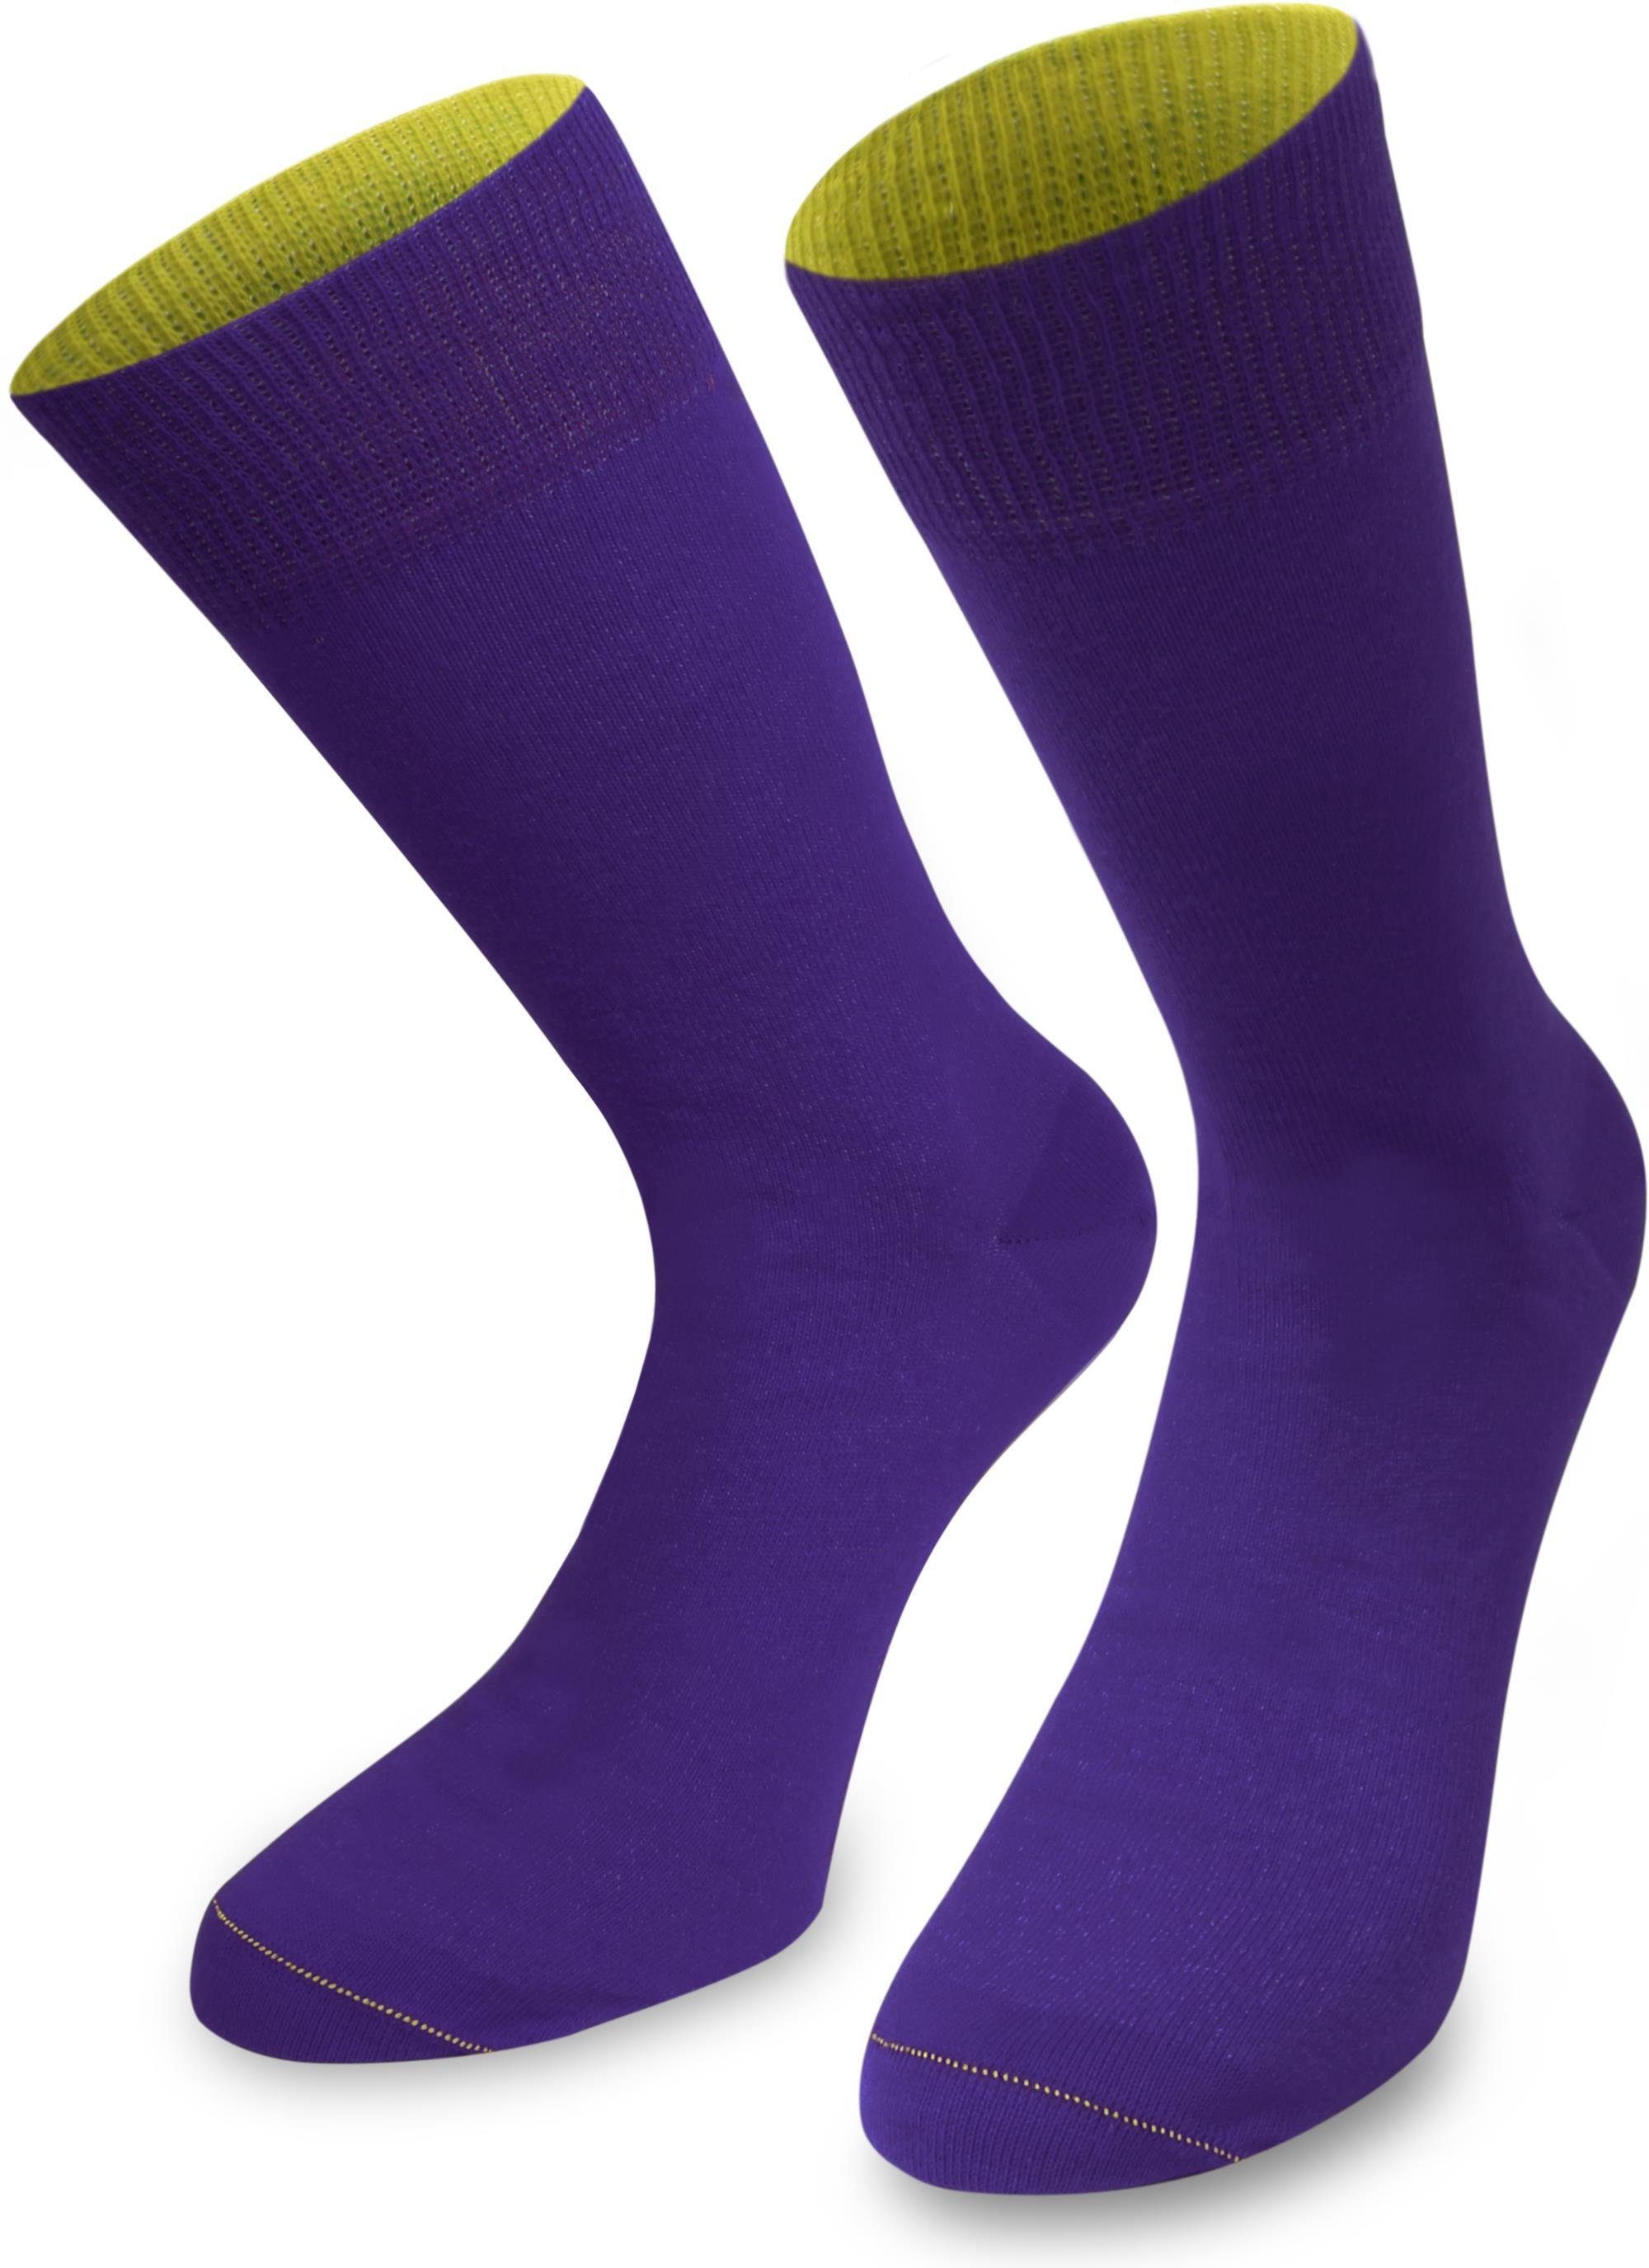 normani Basicsocken 1 Paar Socken Bi-Color (1 Paar) farbig abgesetzter Bund Lila/Limette